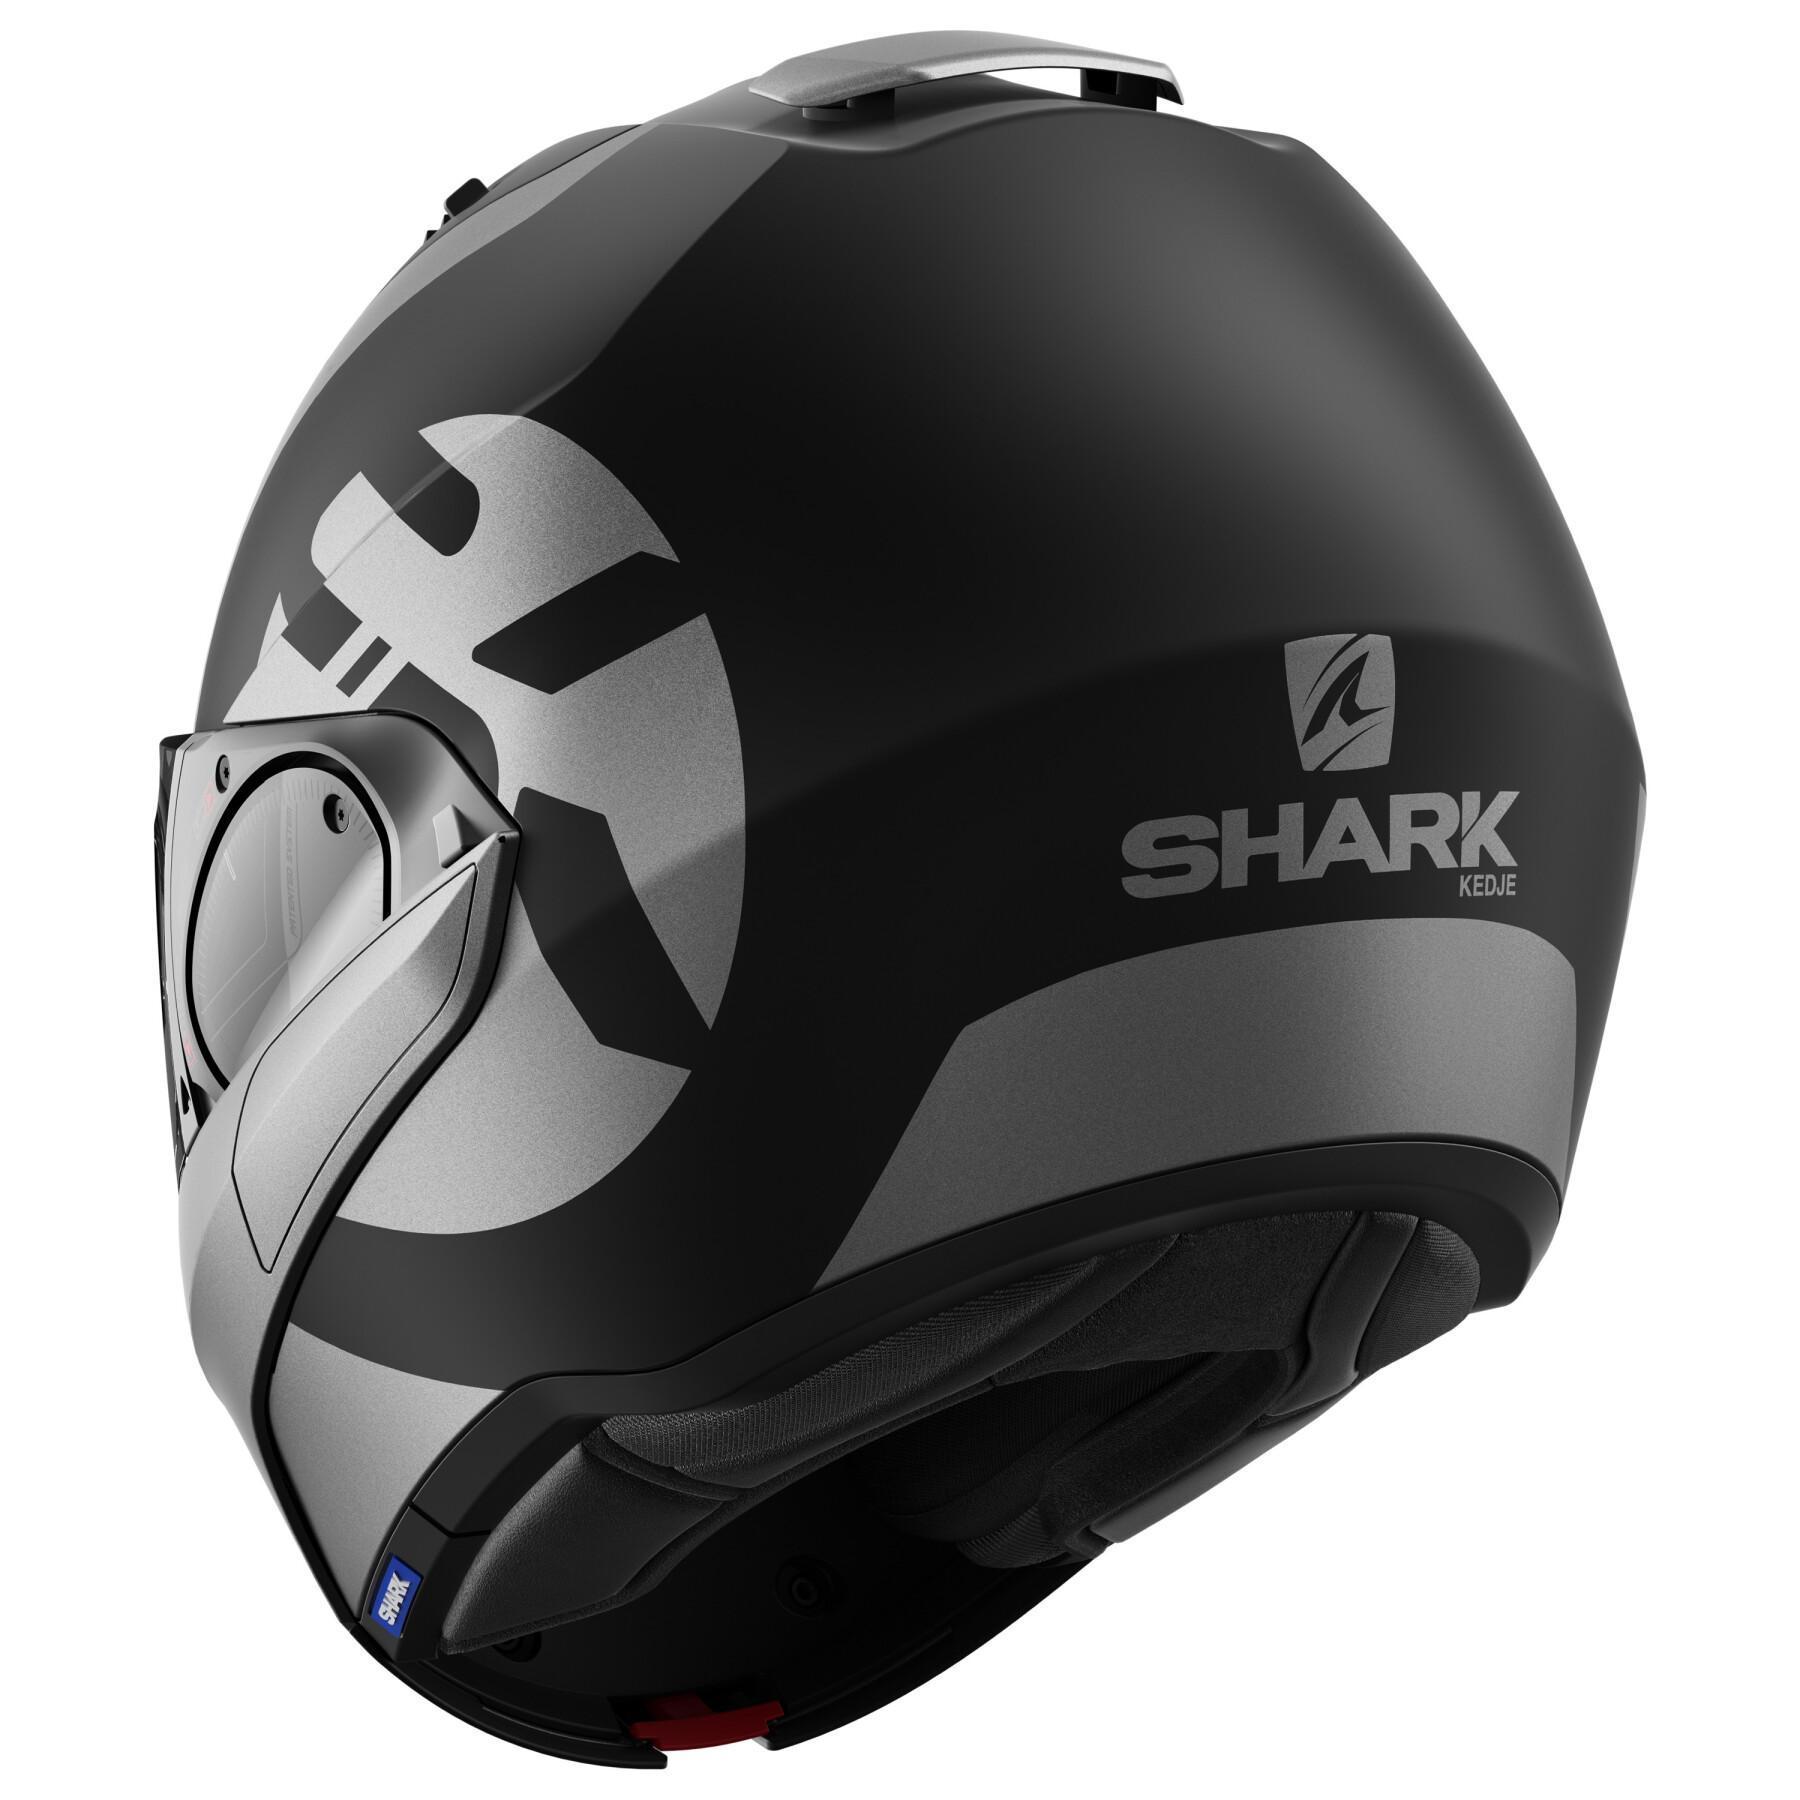 Modular motorcycle helmet Shark evo es kedje